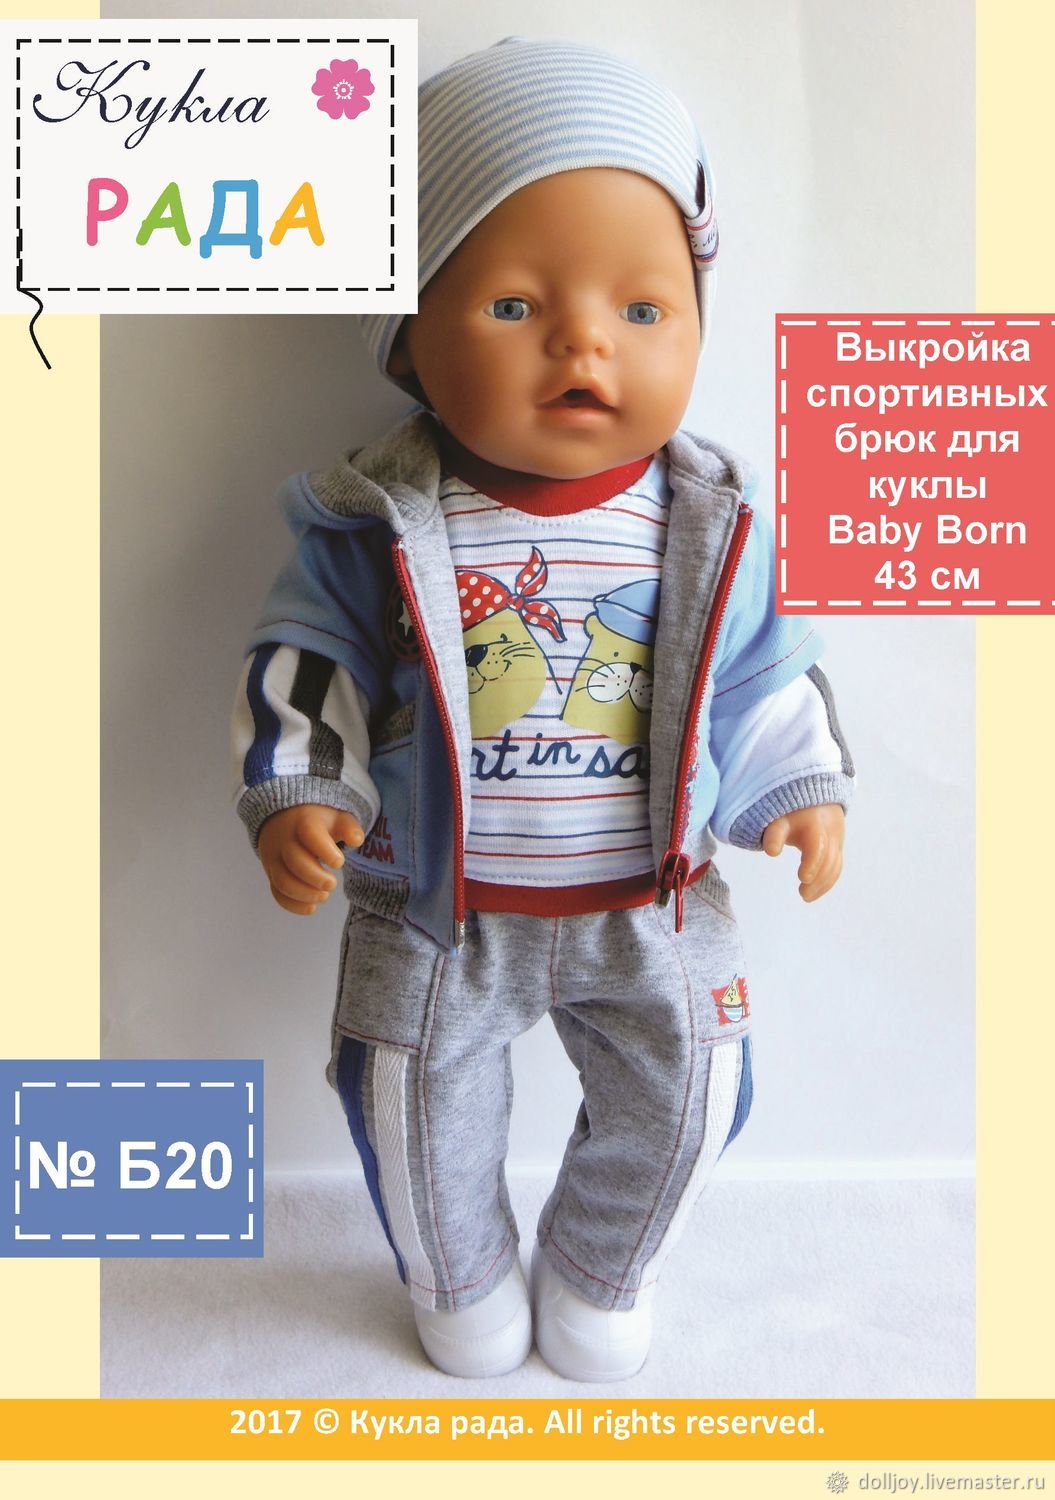 Одежда для беби бон(baby born) иВыкройки+МК. | ВКонтакте